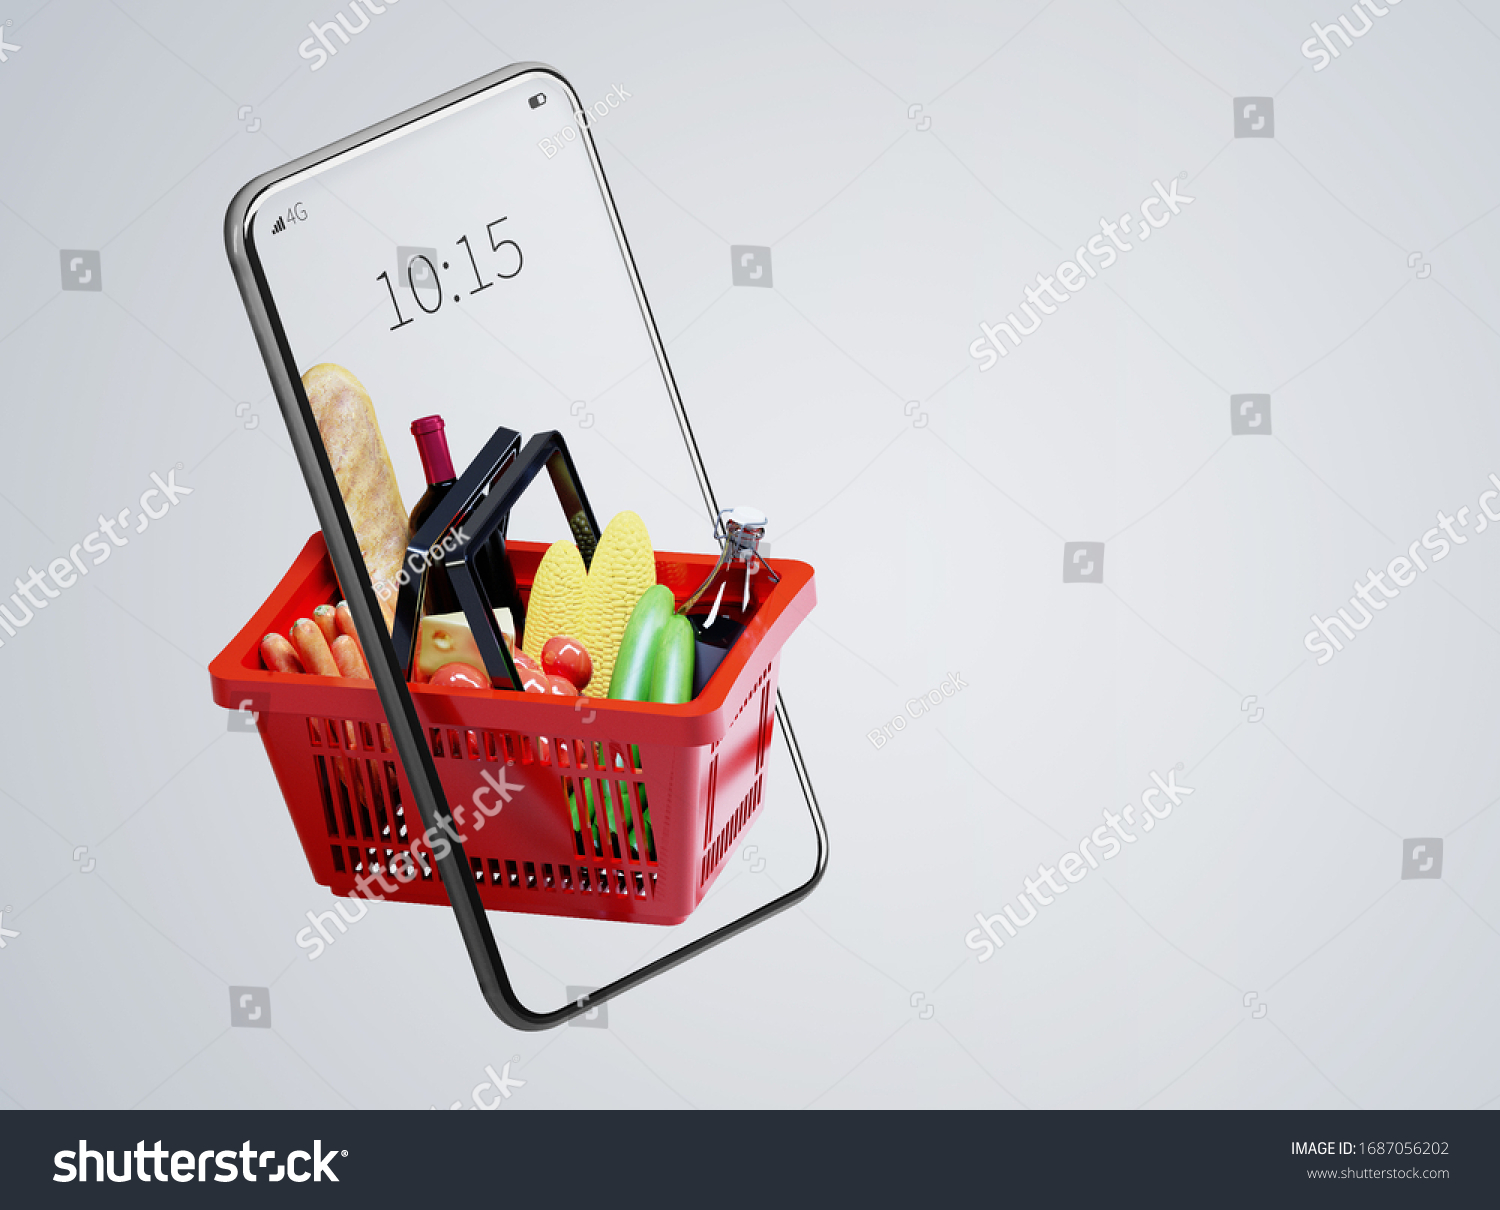 Service for delivery app. Food market in smartphone. Online shop. Food delivery background concept. Online shop in your smartphone. Shopping cart. #1687056202